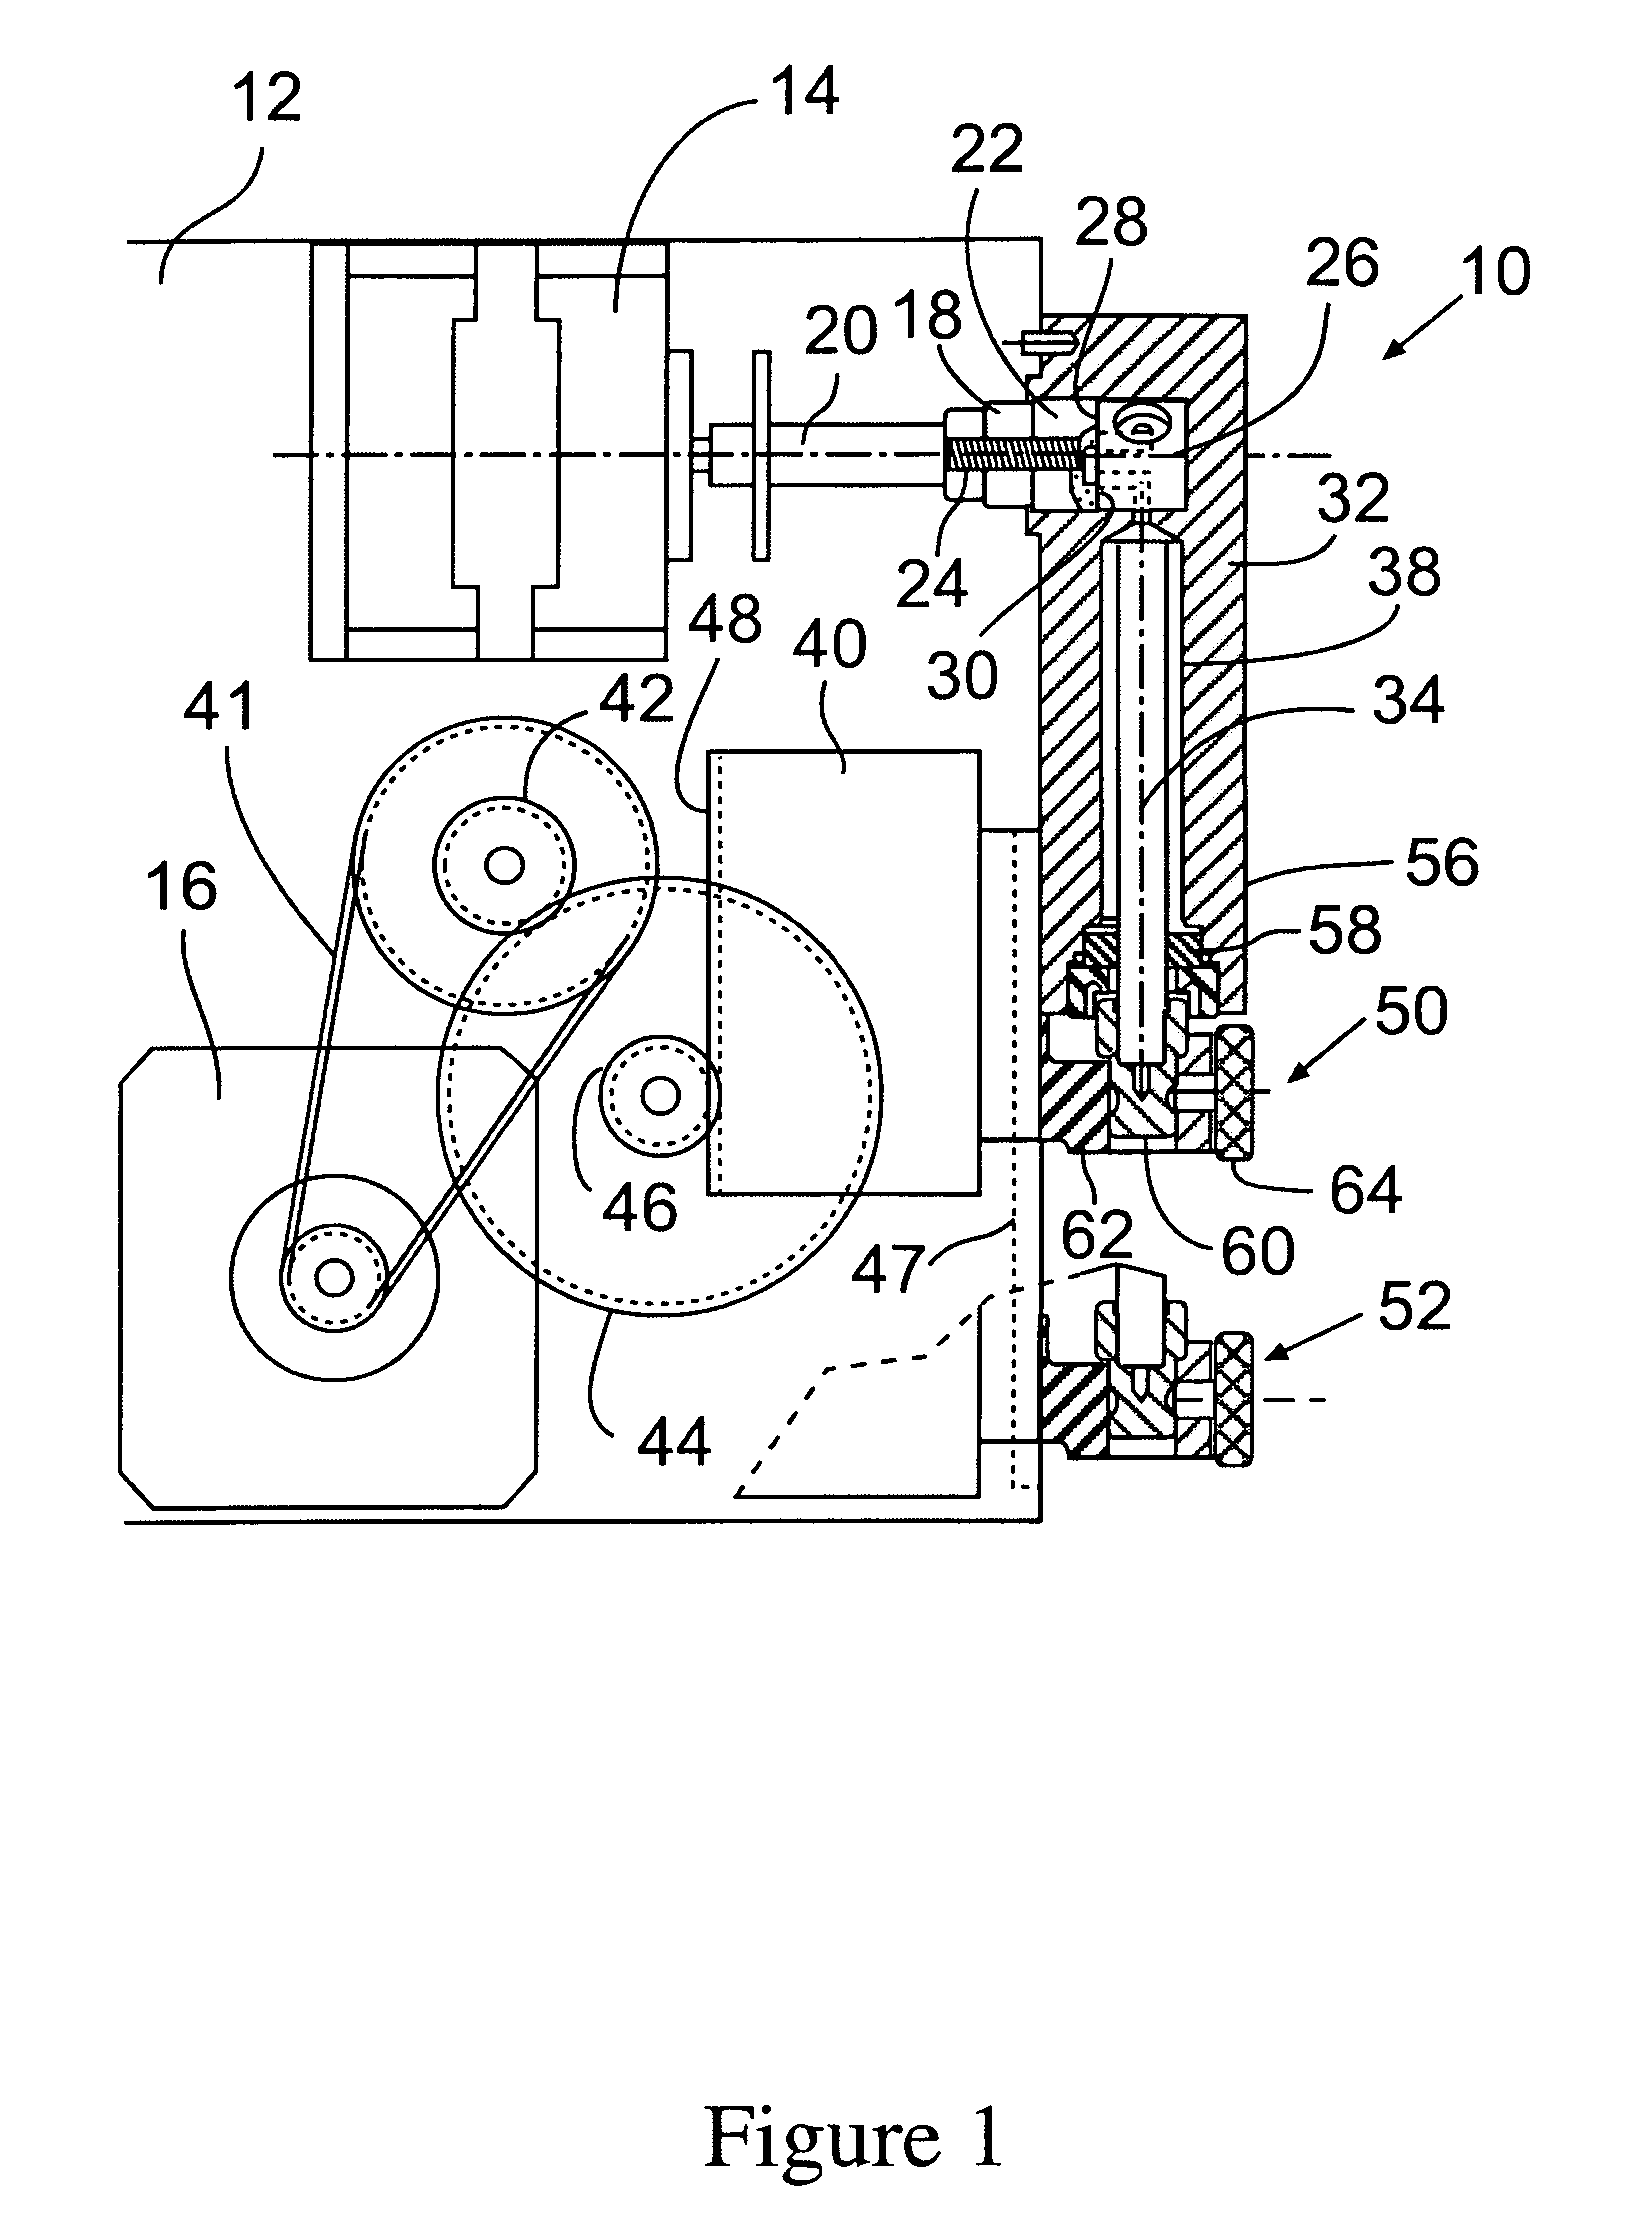 Integrated pump and ceramic valve